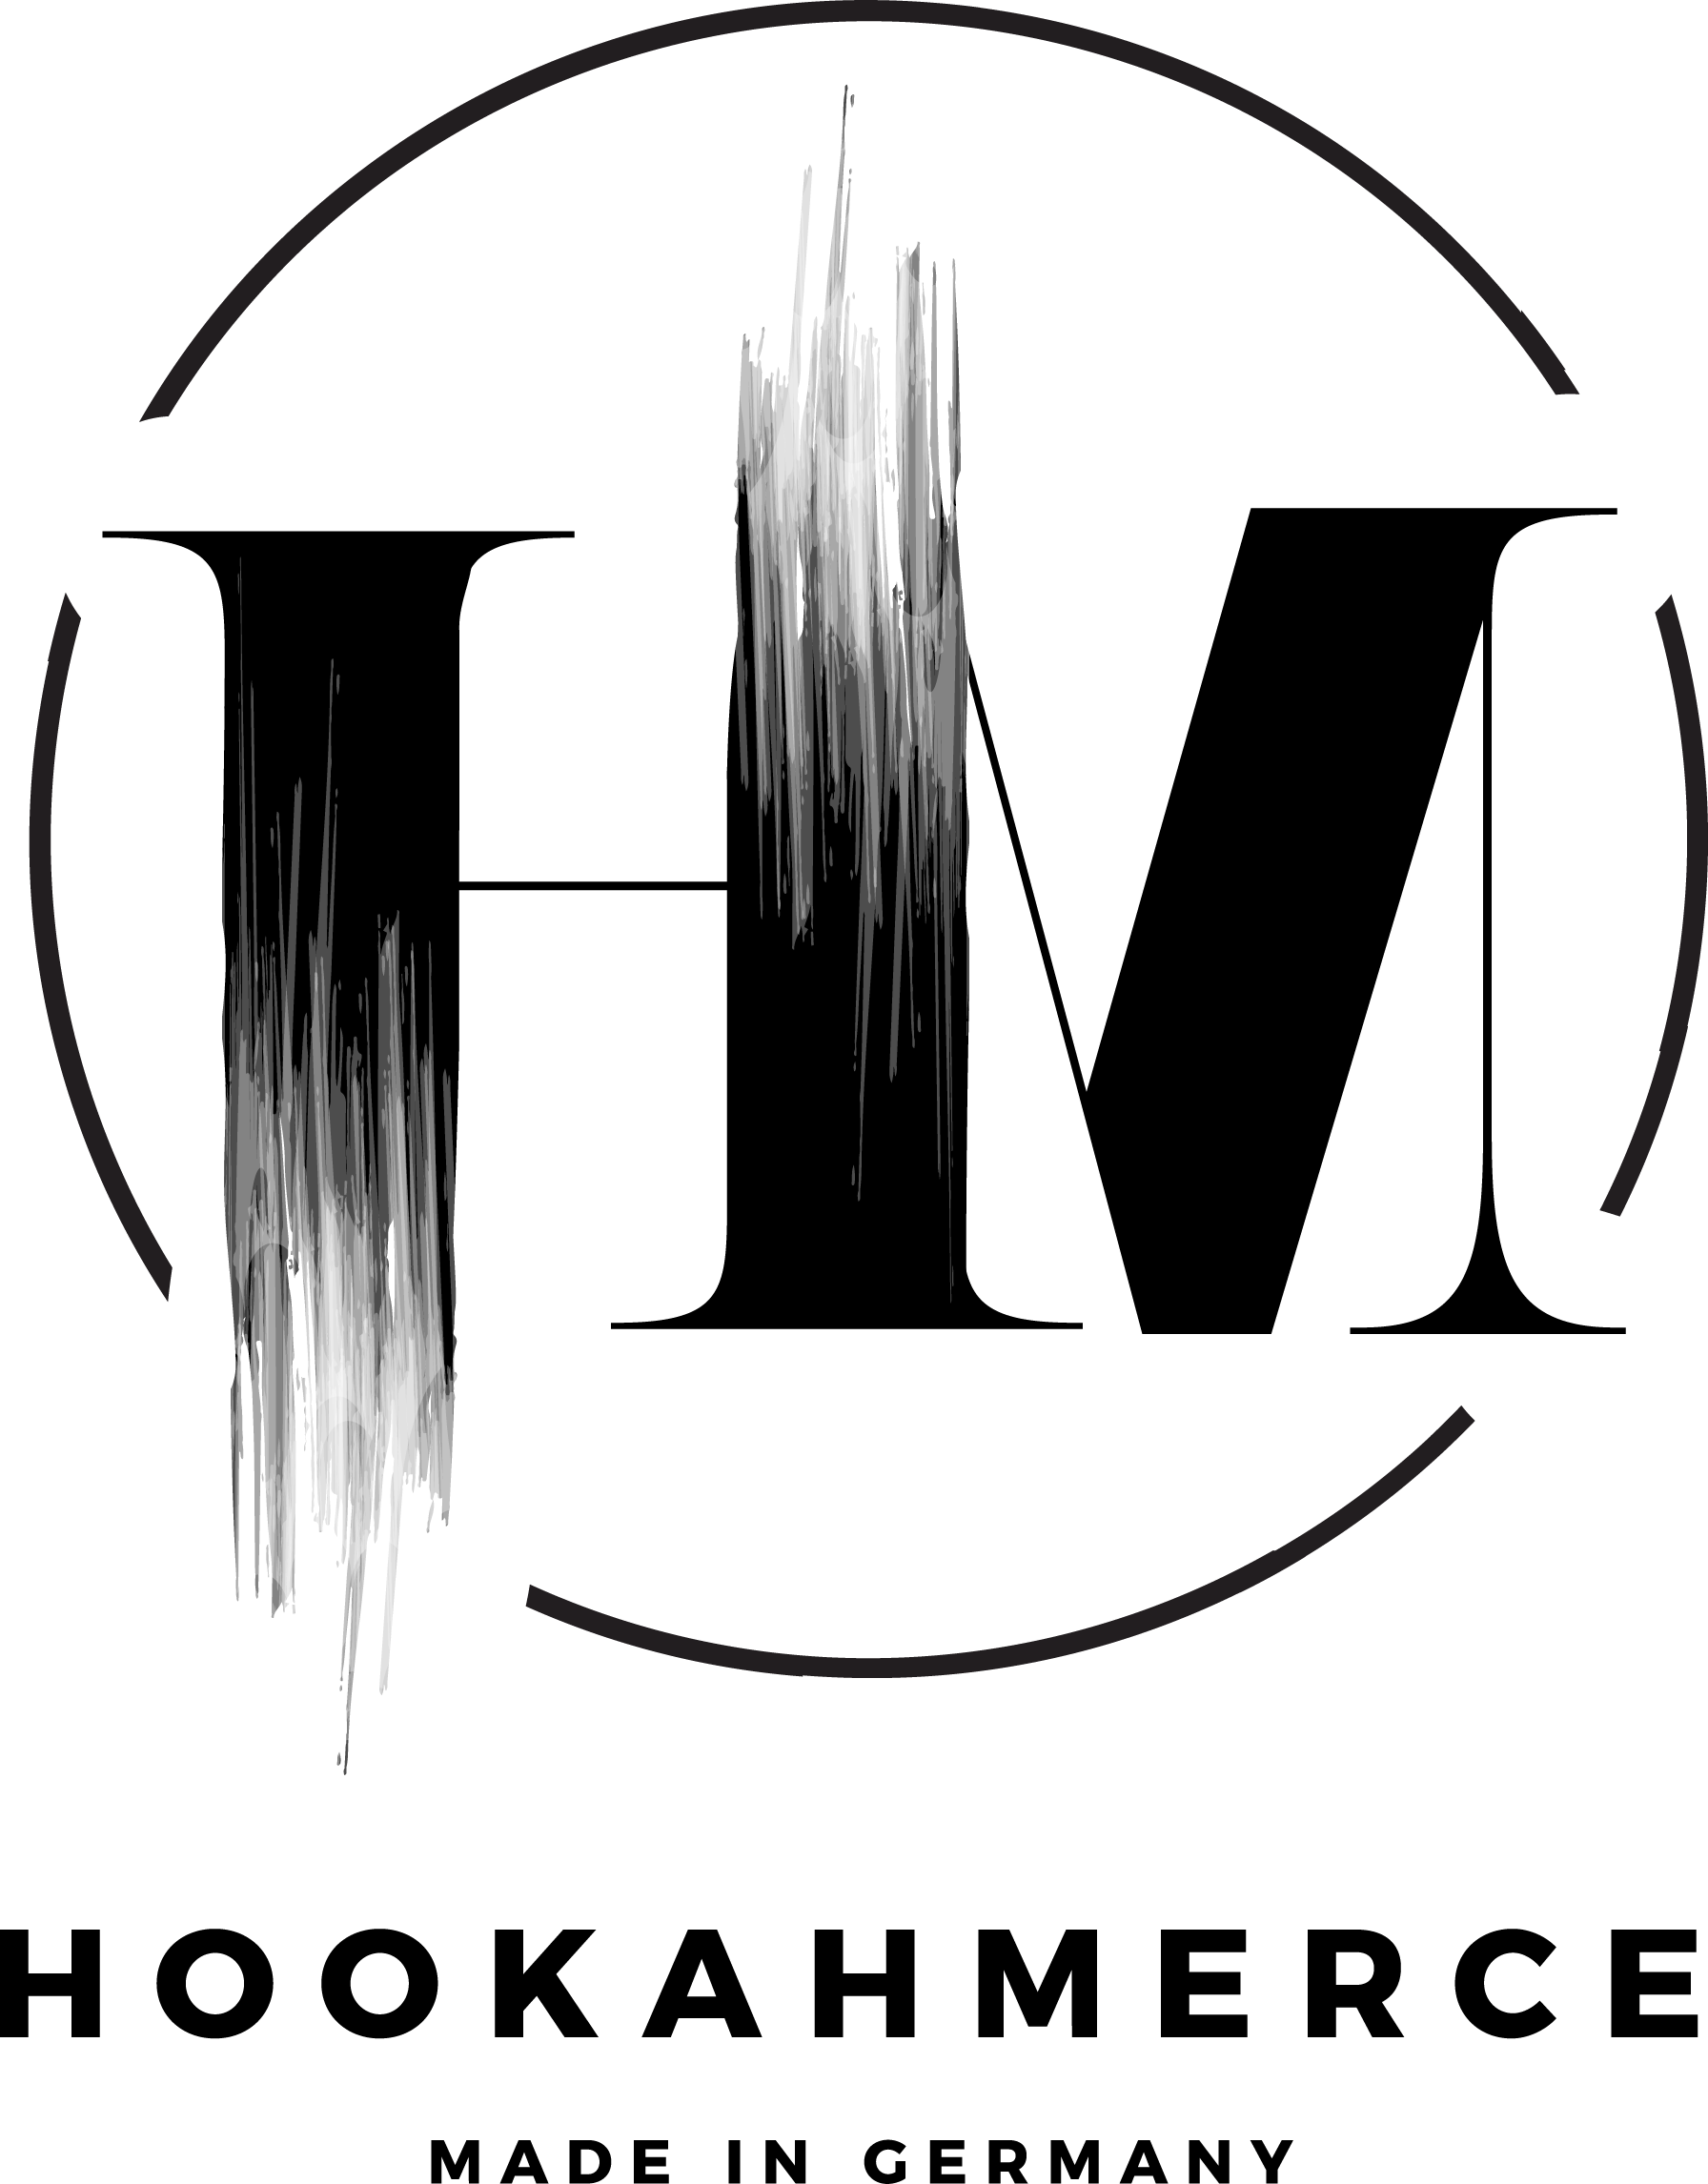 Hookahmerce | Made in Germany